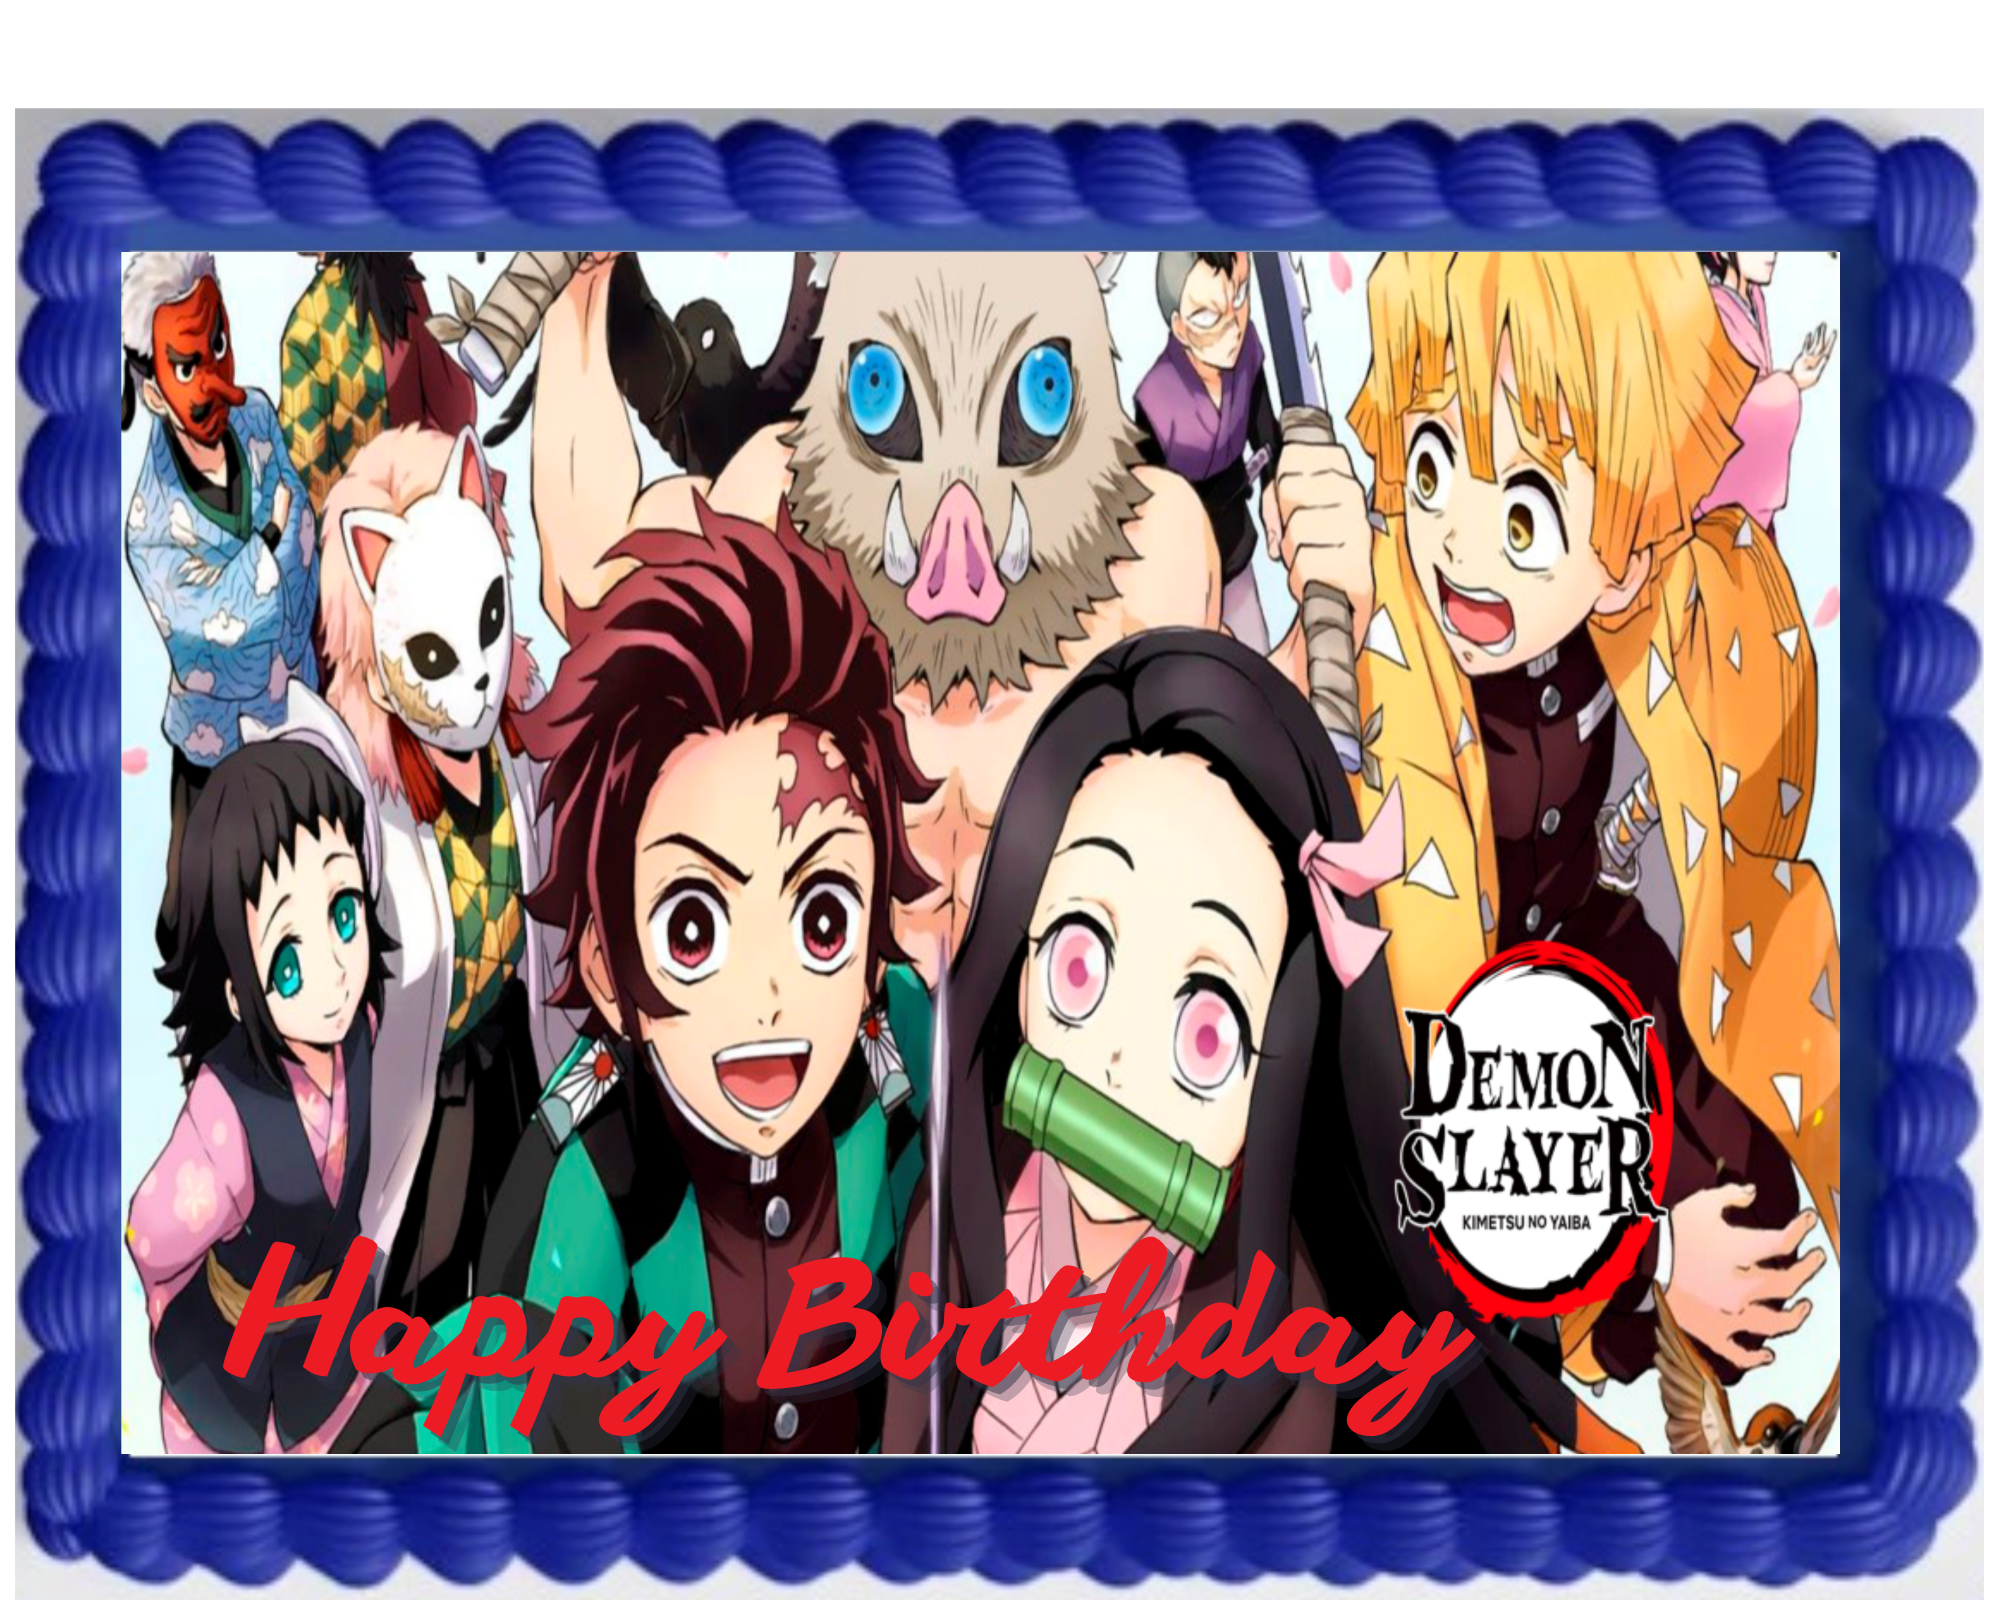 Slayer Anime Manga Demon Image Edible Birthday Cake Topper Frosting Sheet  Edible Cake Decoration for a 1/4 Sheet Cake 10 by 8 